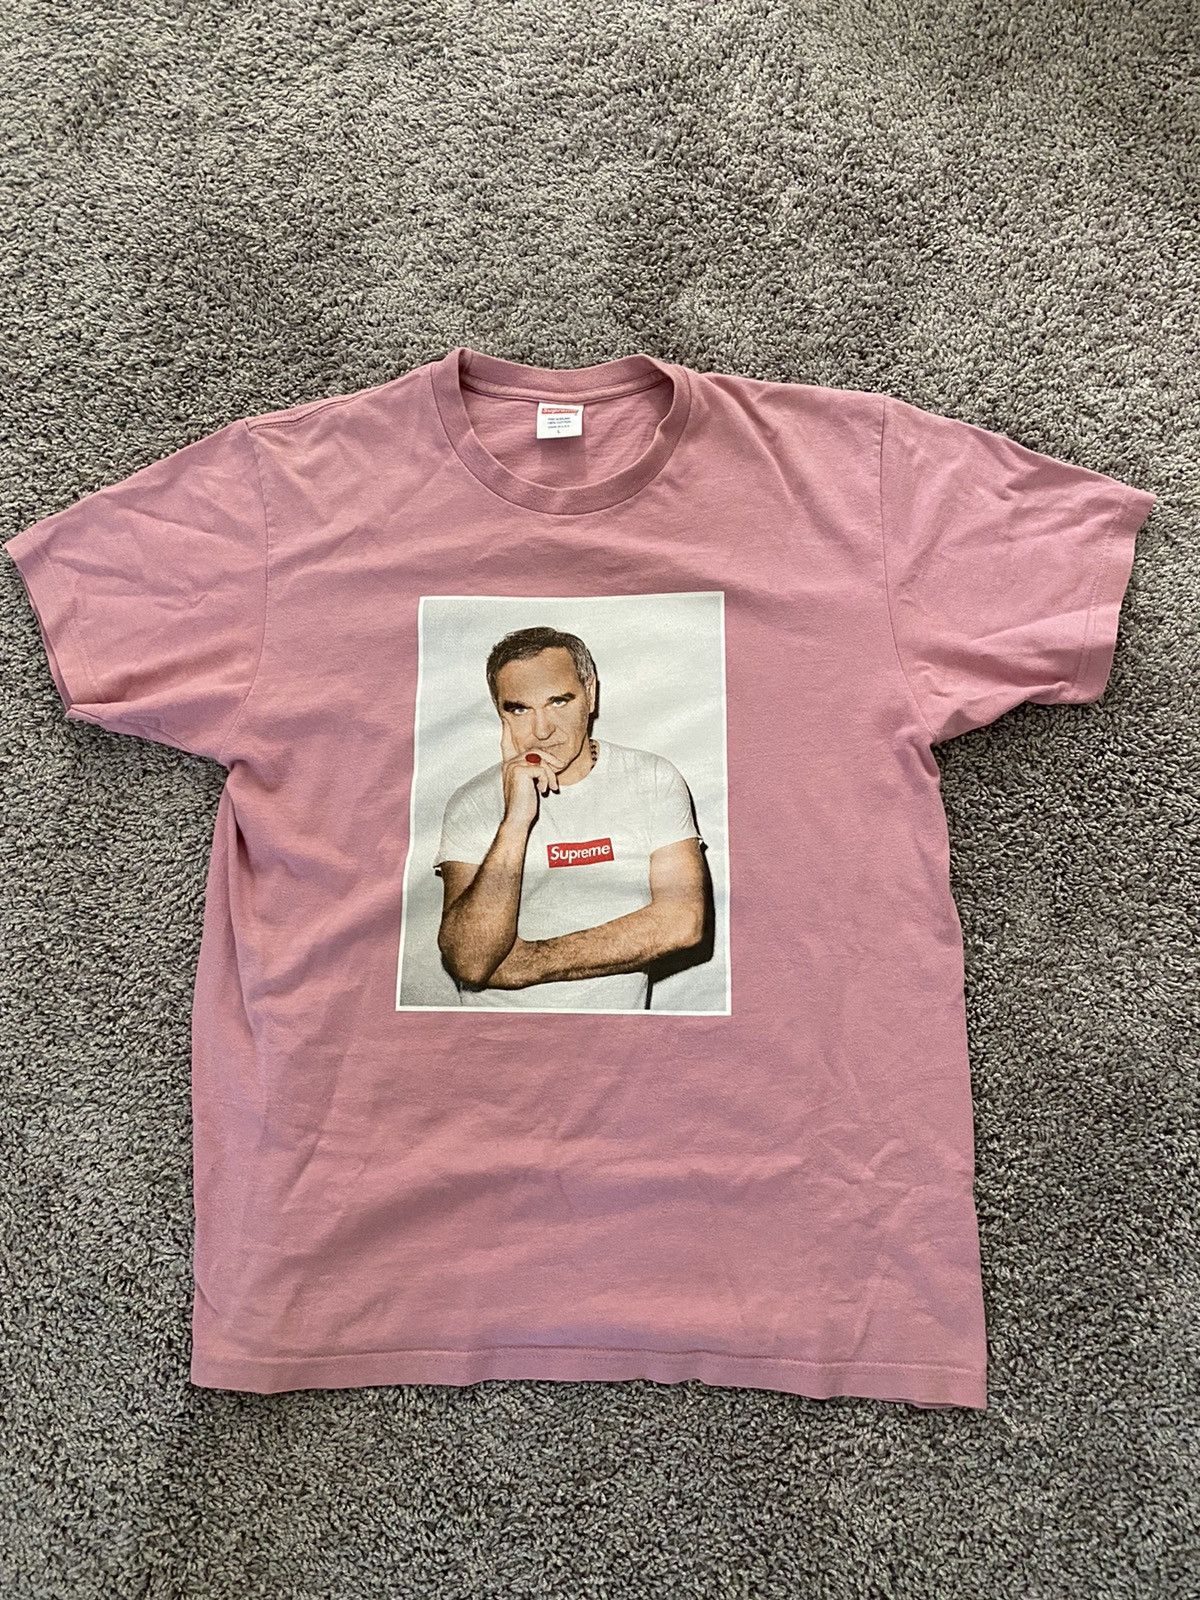 Supreme Supreme Pink Morrissey T-Shirt | Grailed